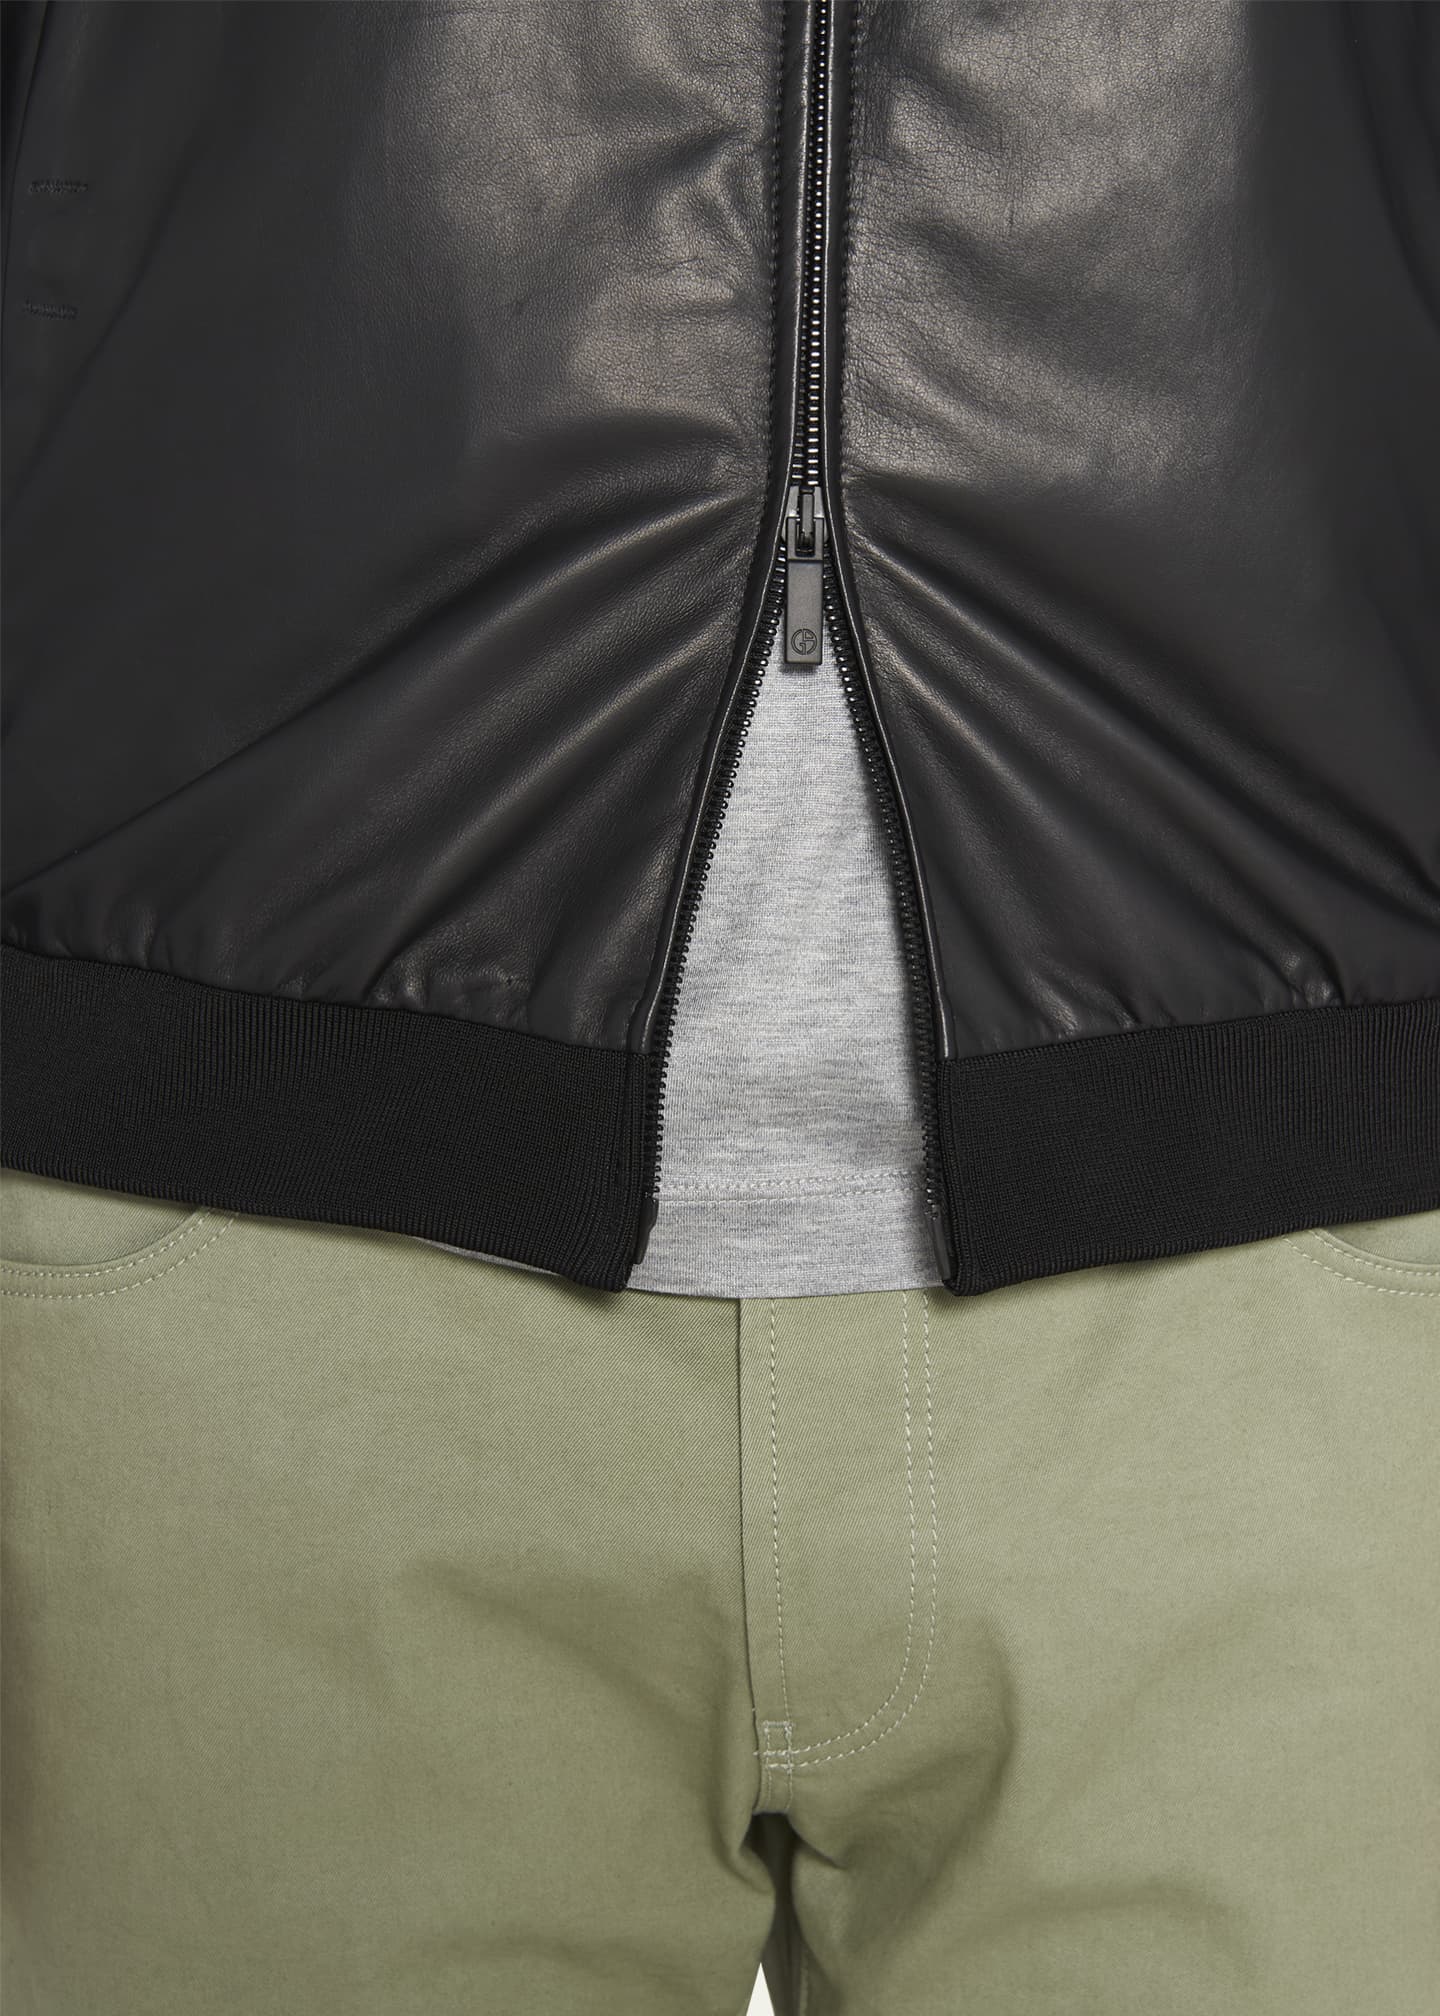 Eik De Alpen eetlust Giorgio Armani Men's Lambskin Leather Jacket - Bergdorf Goodman